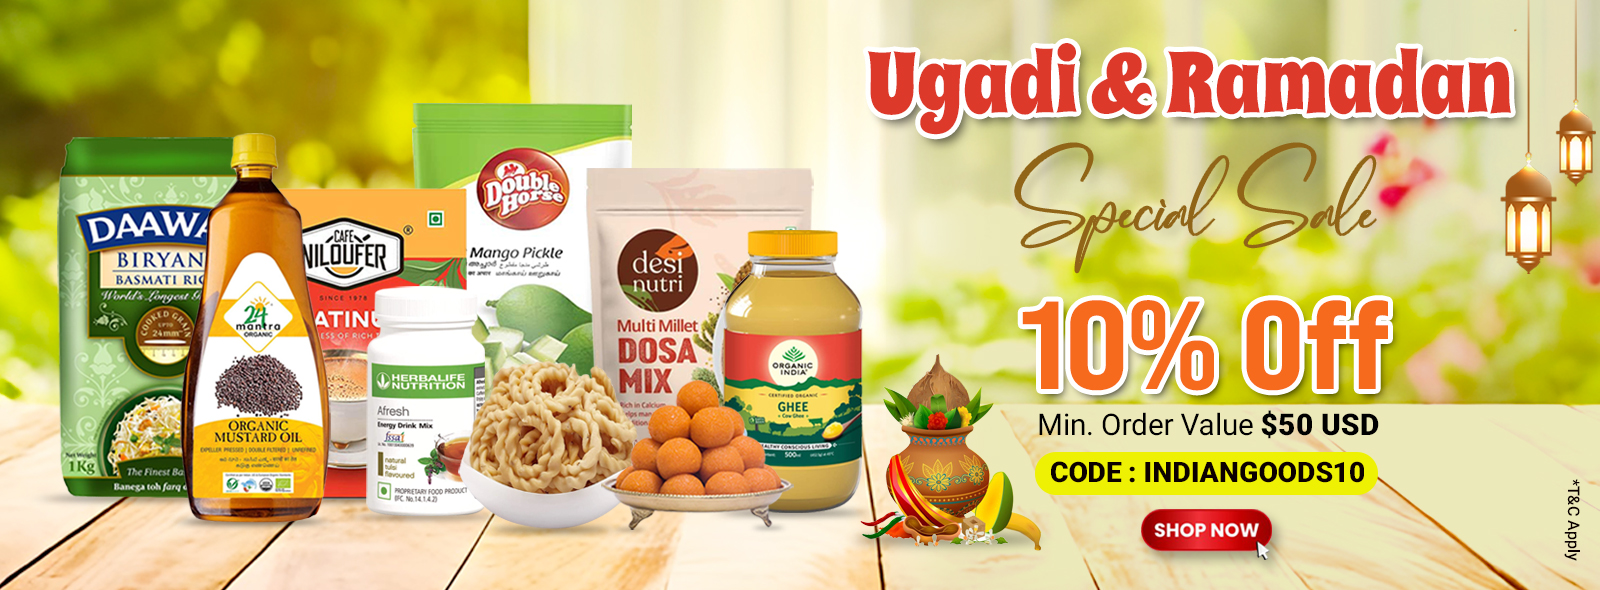 Ugadi & Ramadan Special Sale